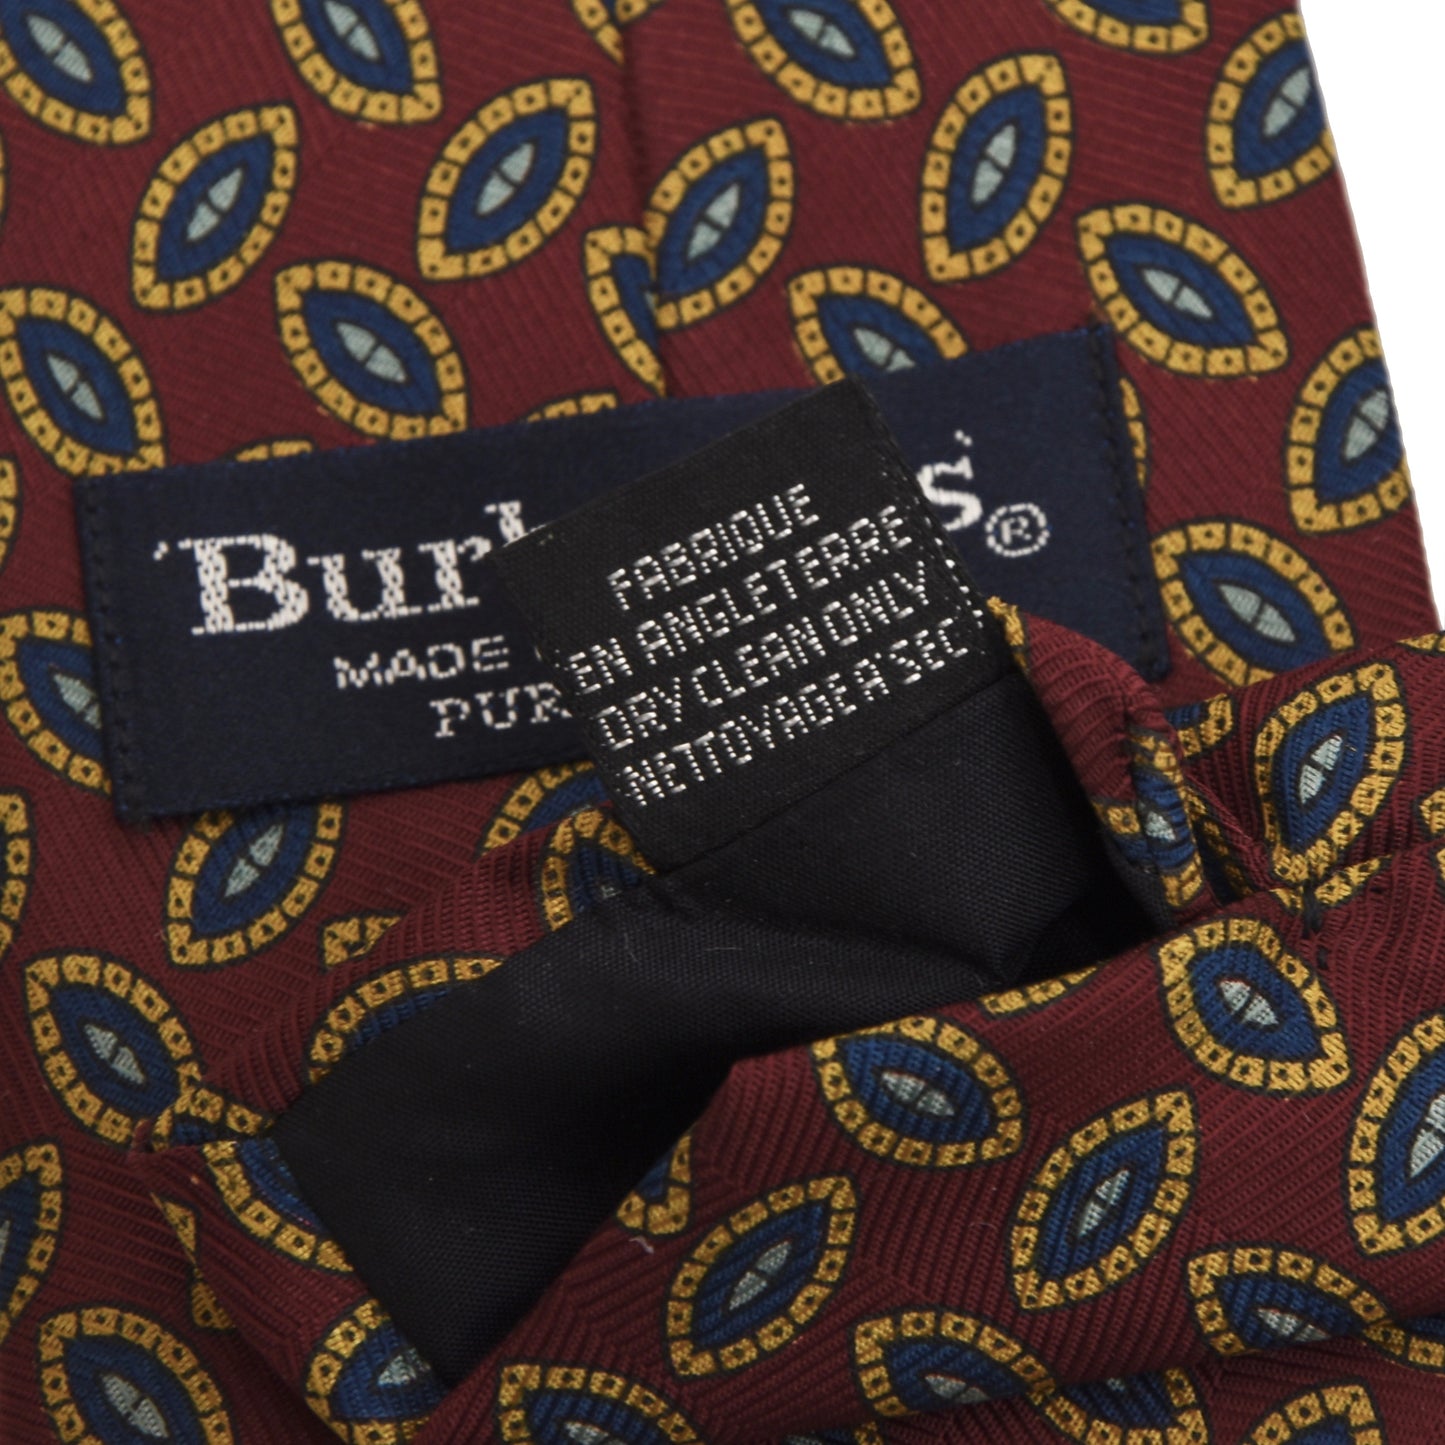 Burberrys London Neat Silk Tie - Burgundy